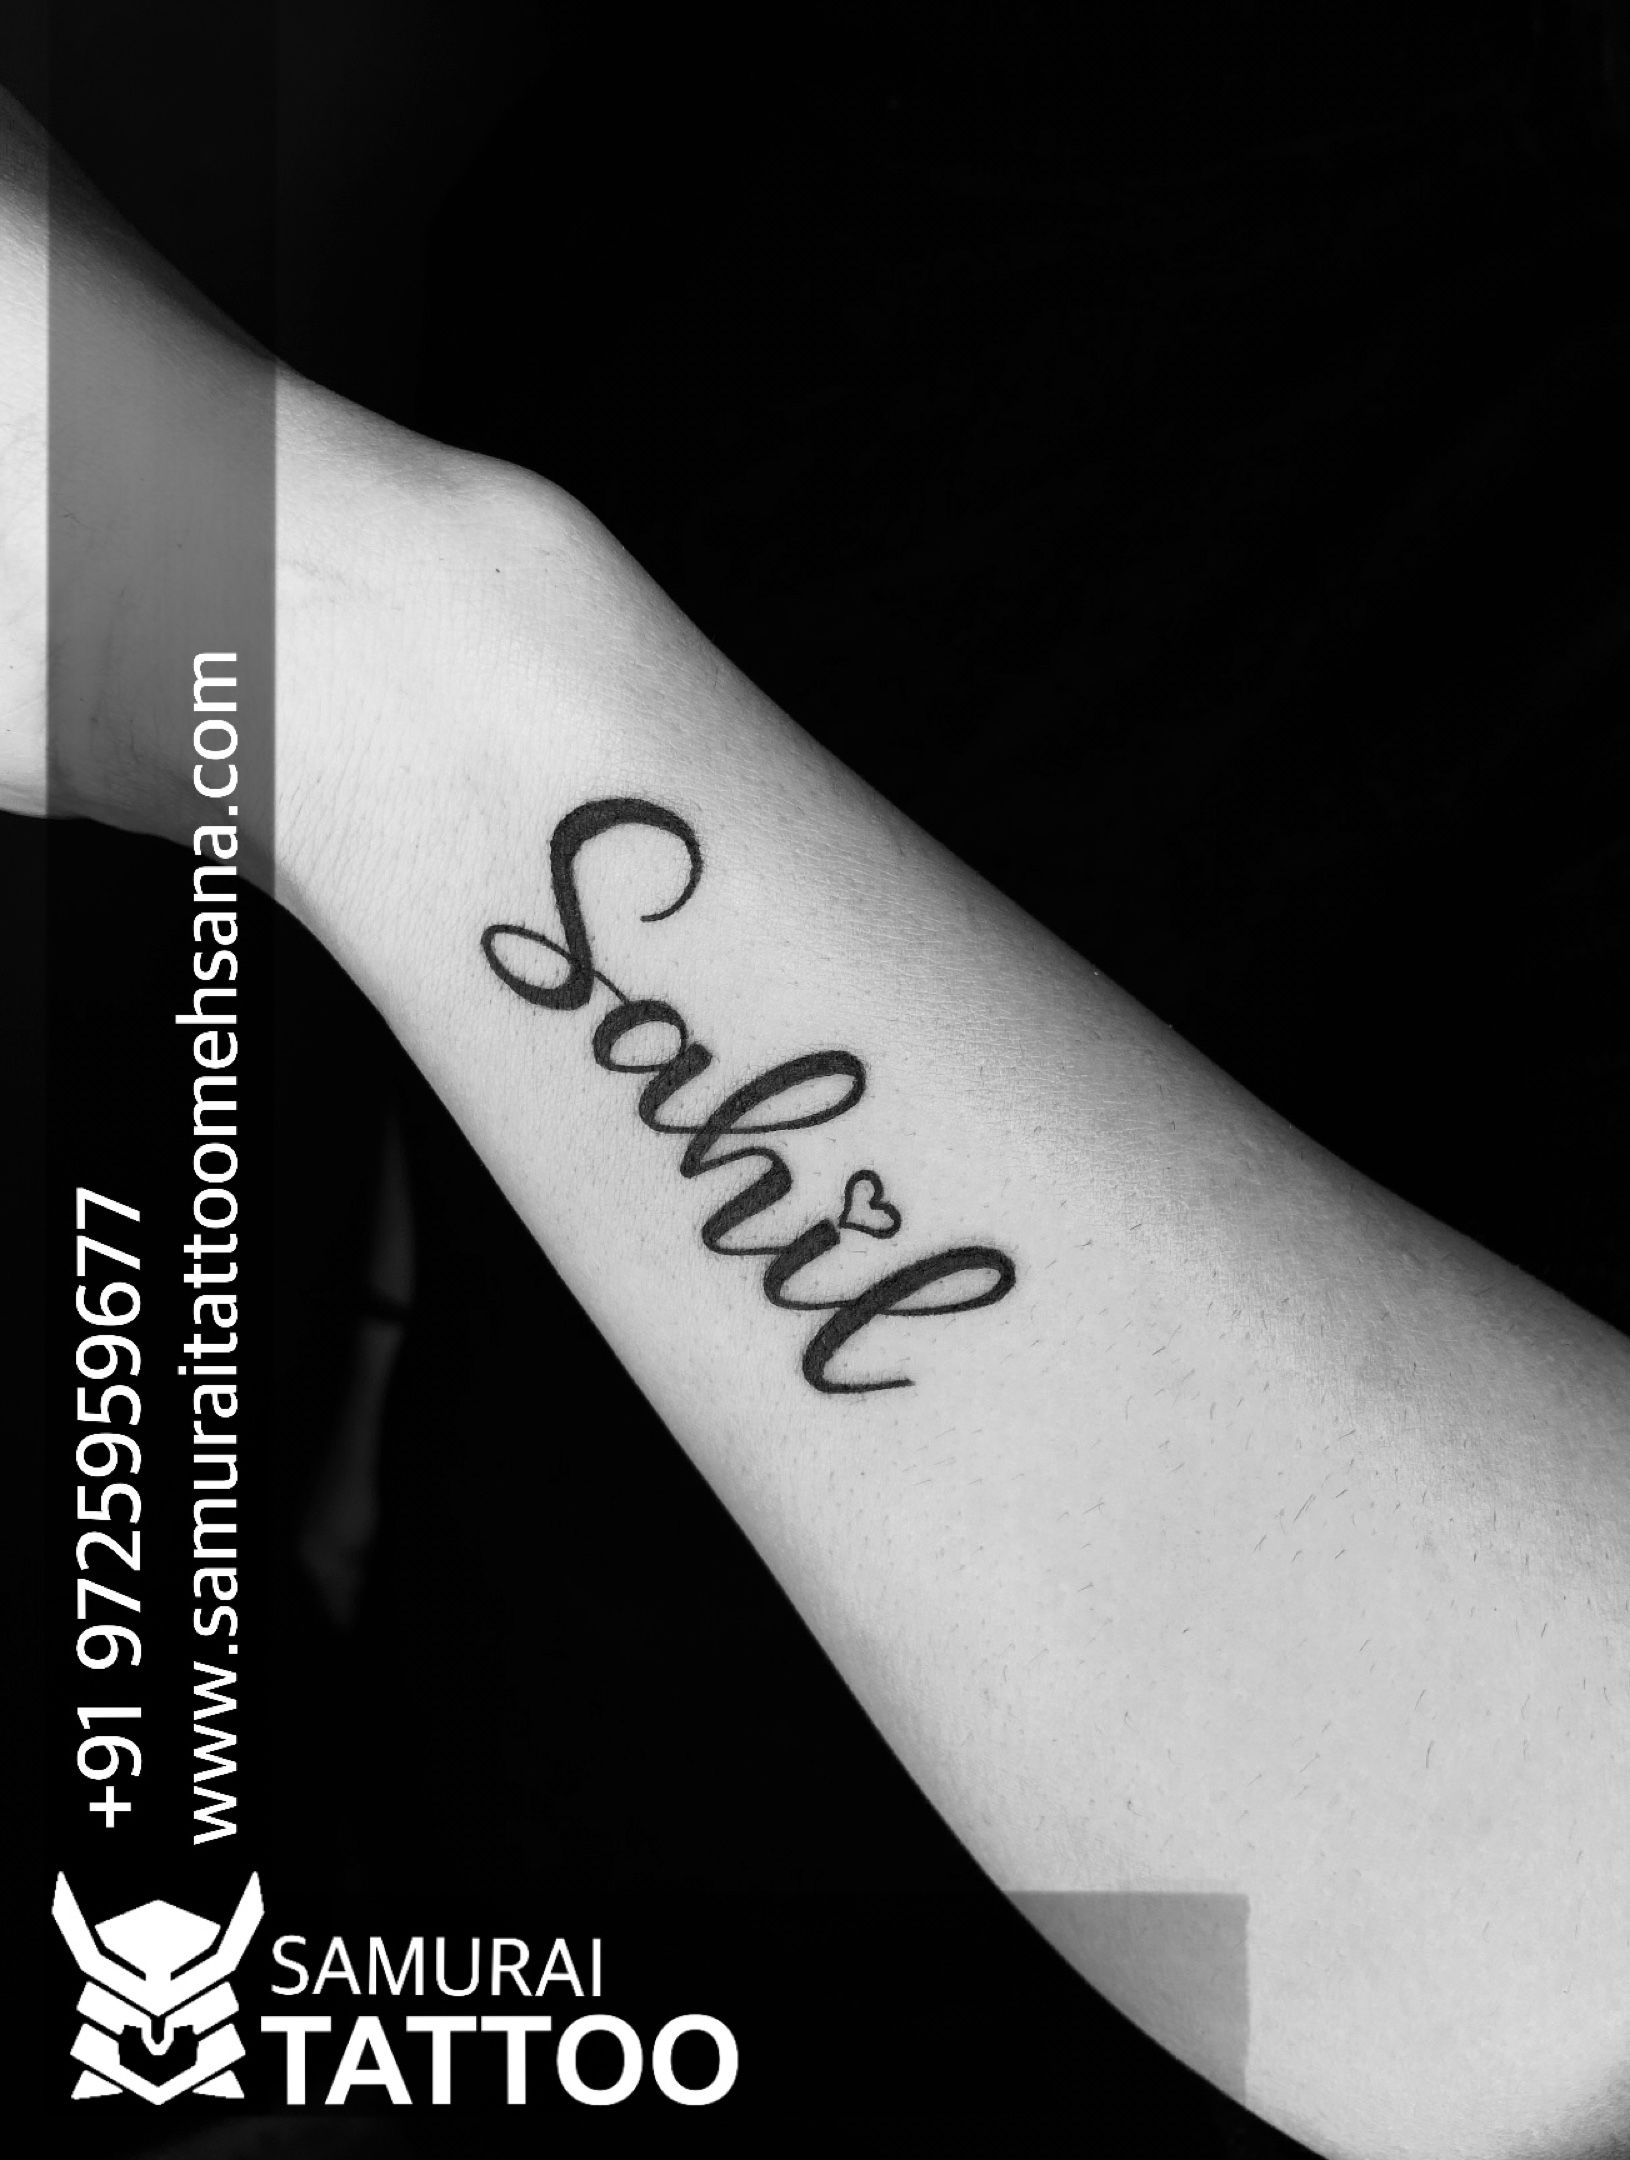 Tattoo uploaded by Samurai Tattoo mehsana • Sahil name tattoo |Sahil tattoo  |Sahil tattoo design |Sahil name tattoo ideas • Tattoodo